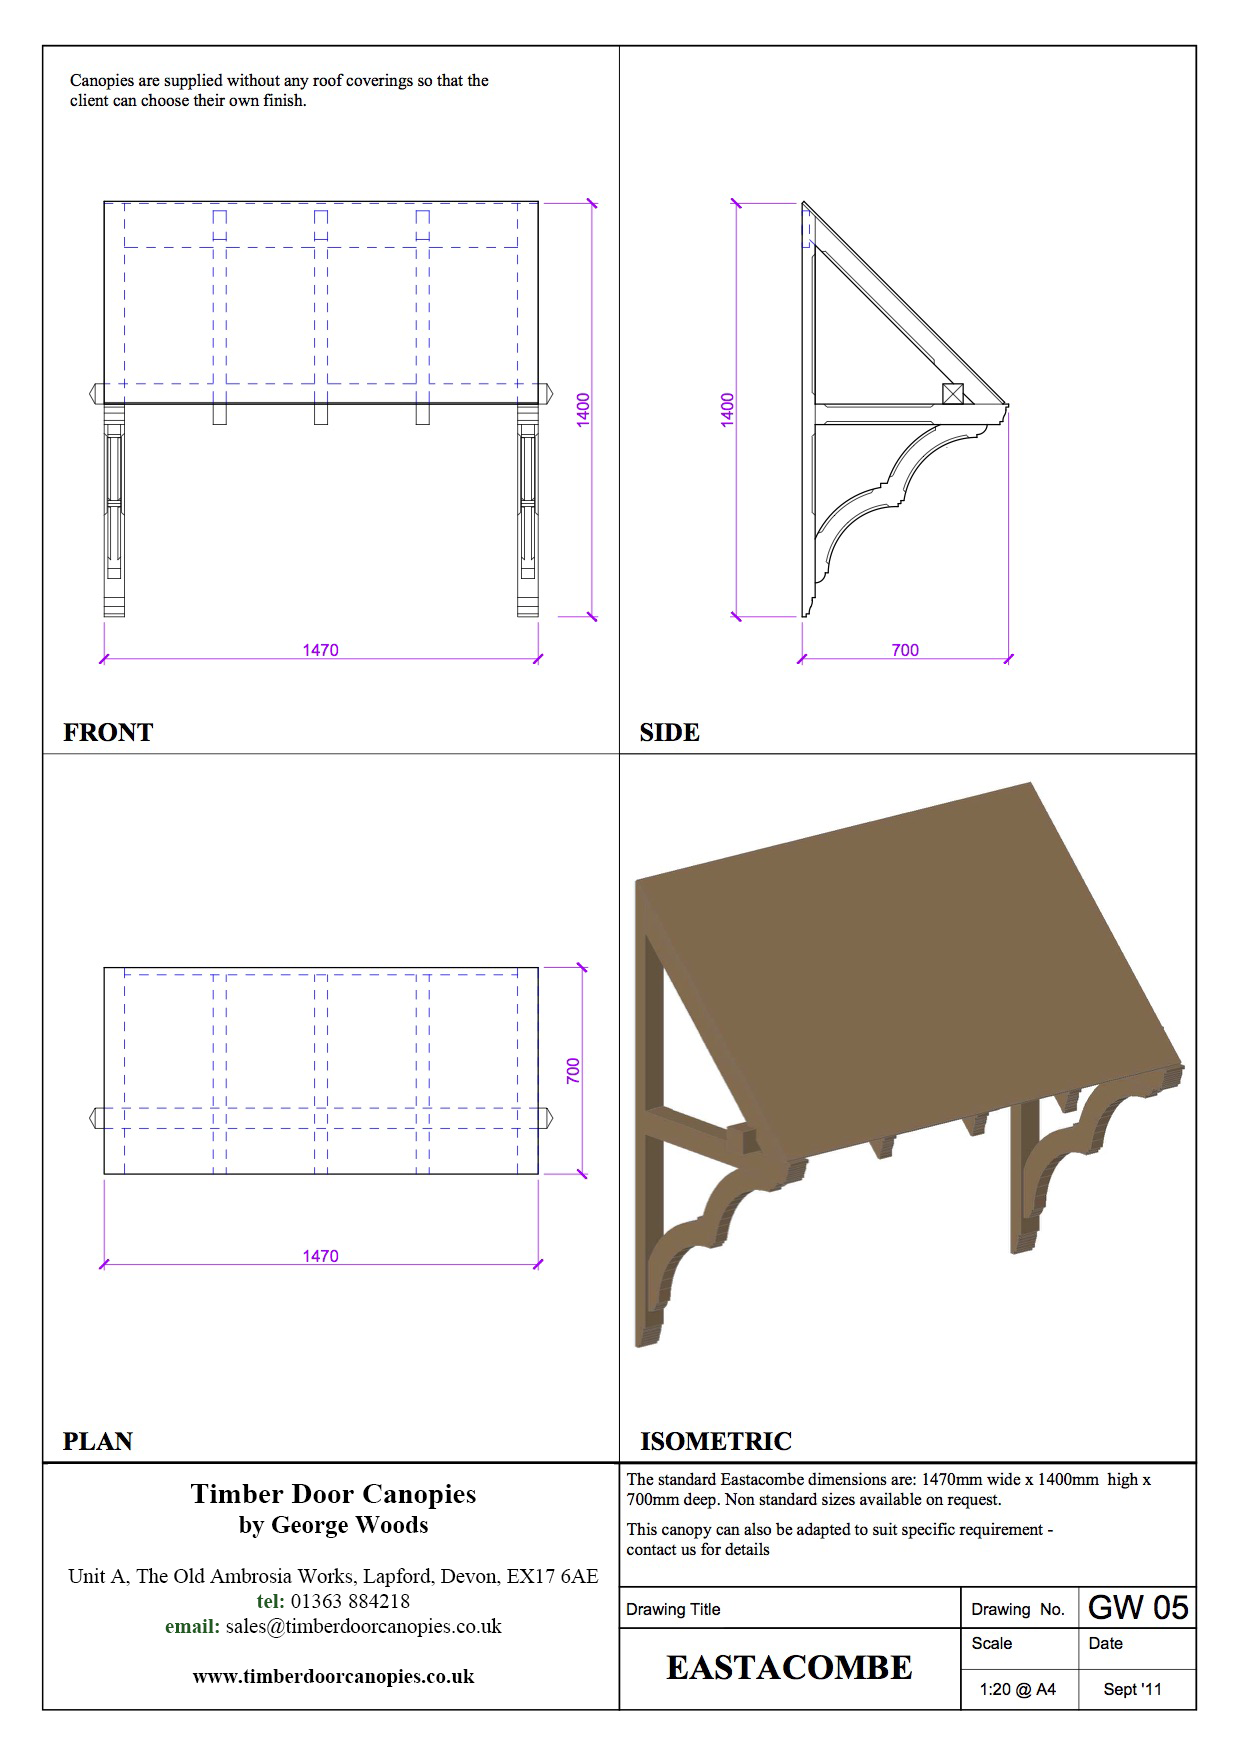 Gittisham canopy CAD drawings